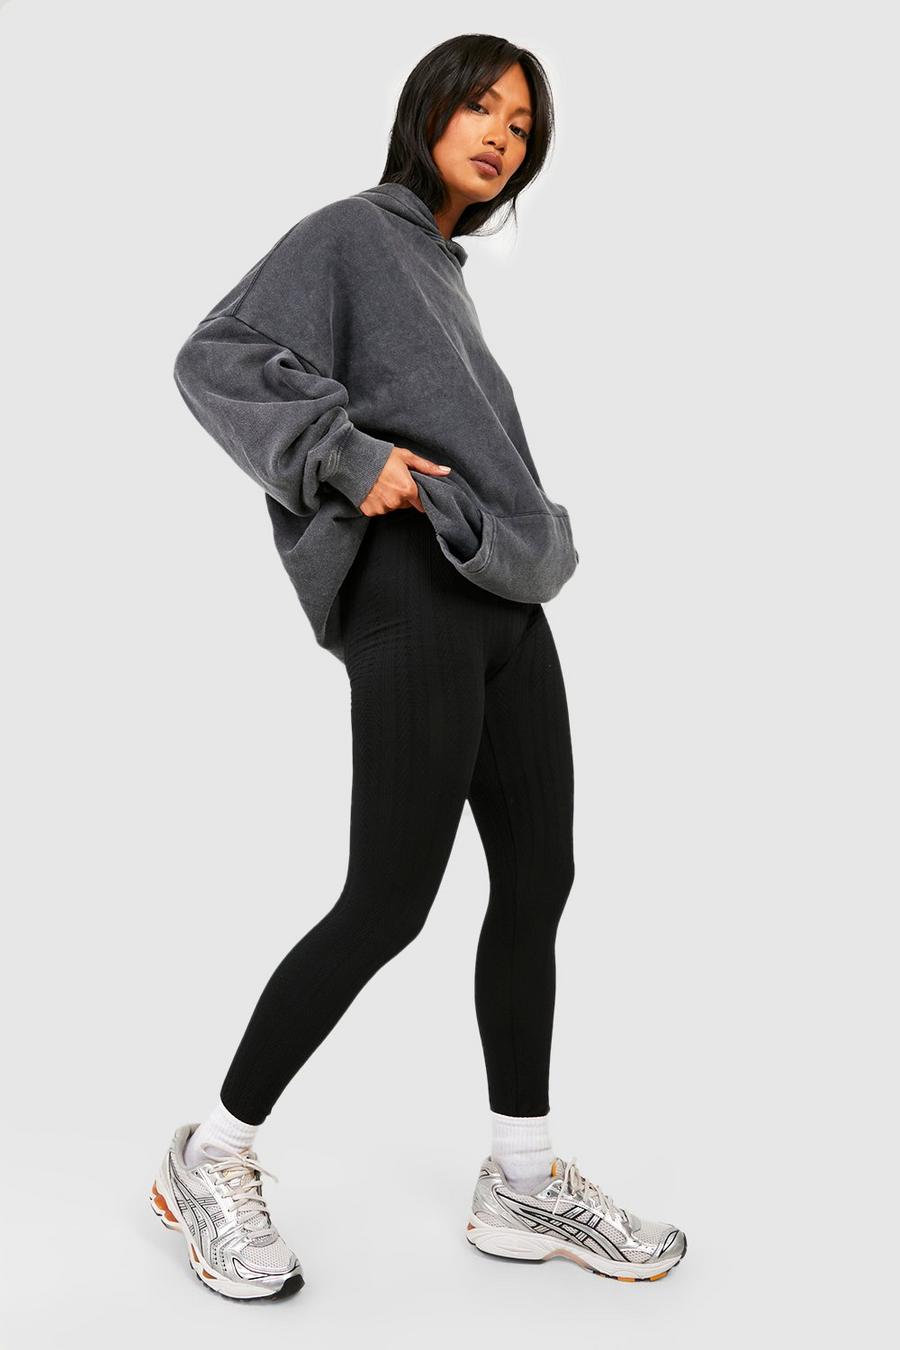 Black Knitted Fleece Lined Supersoft Leggings